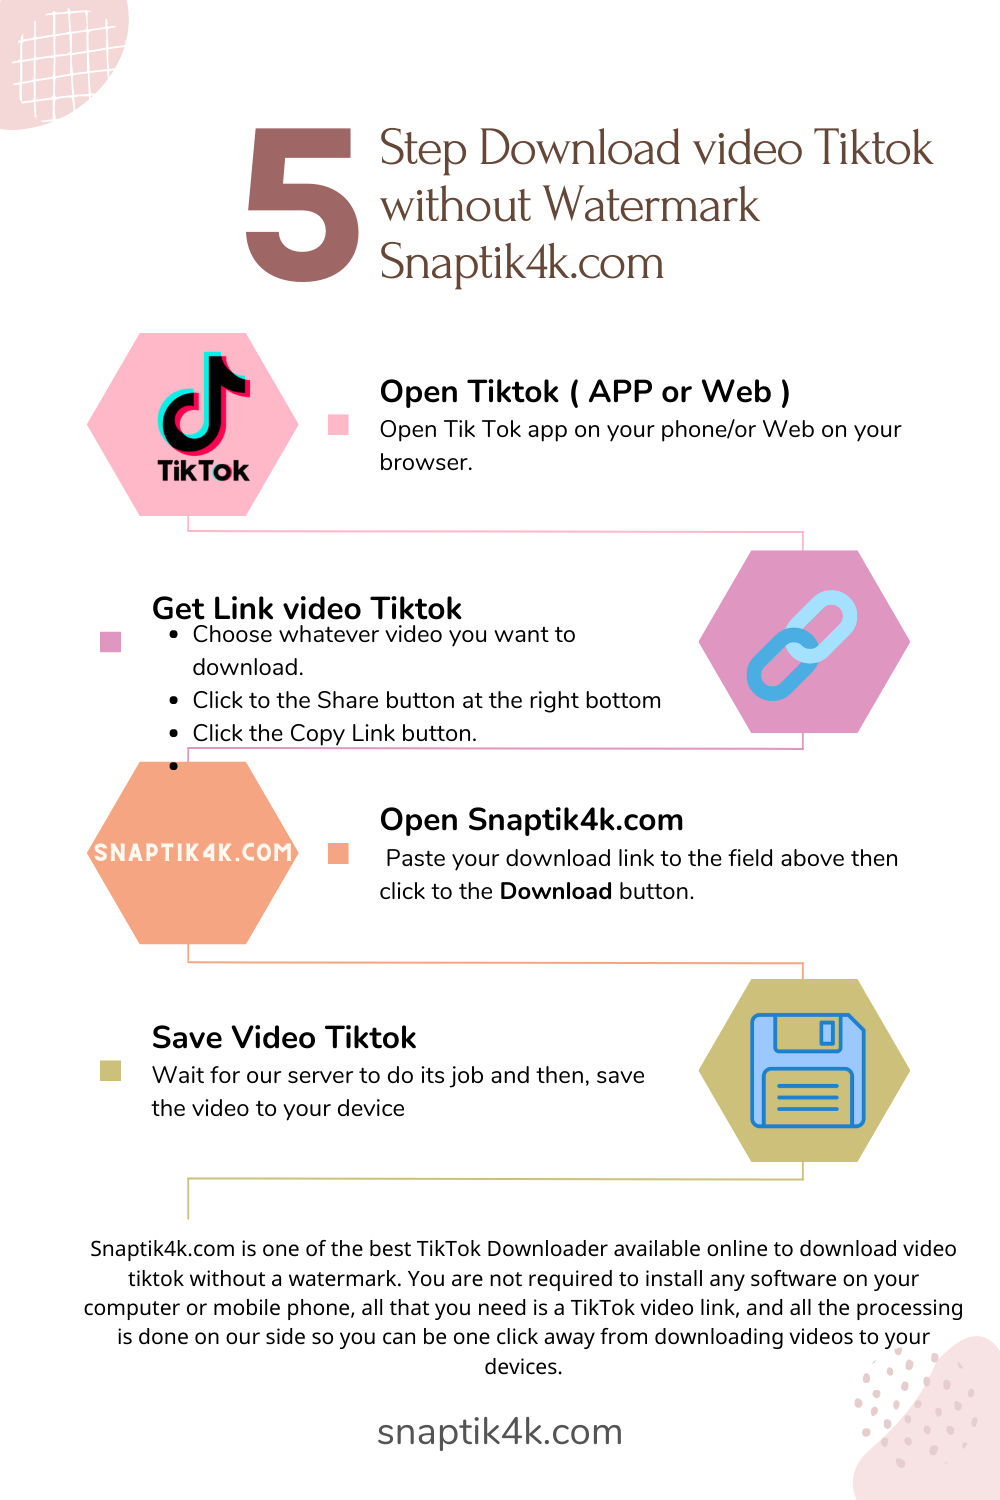 Step Download Video Tiktok with Snaptik4k.com